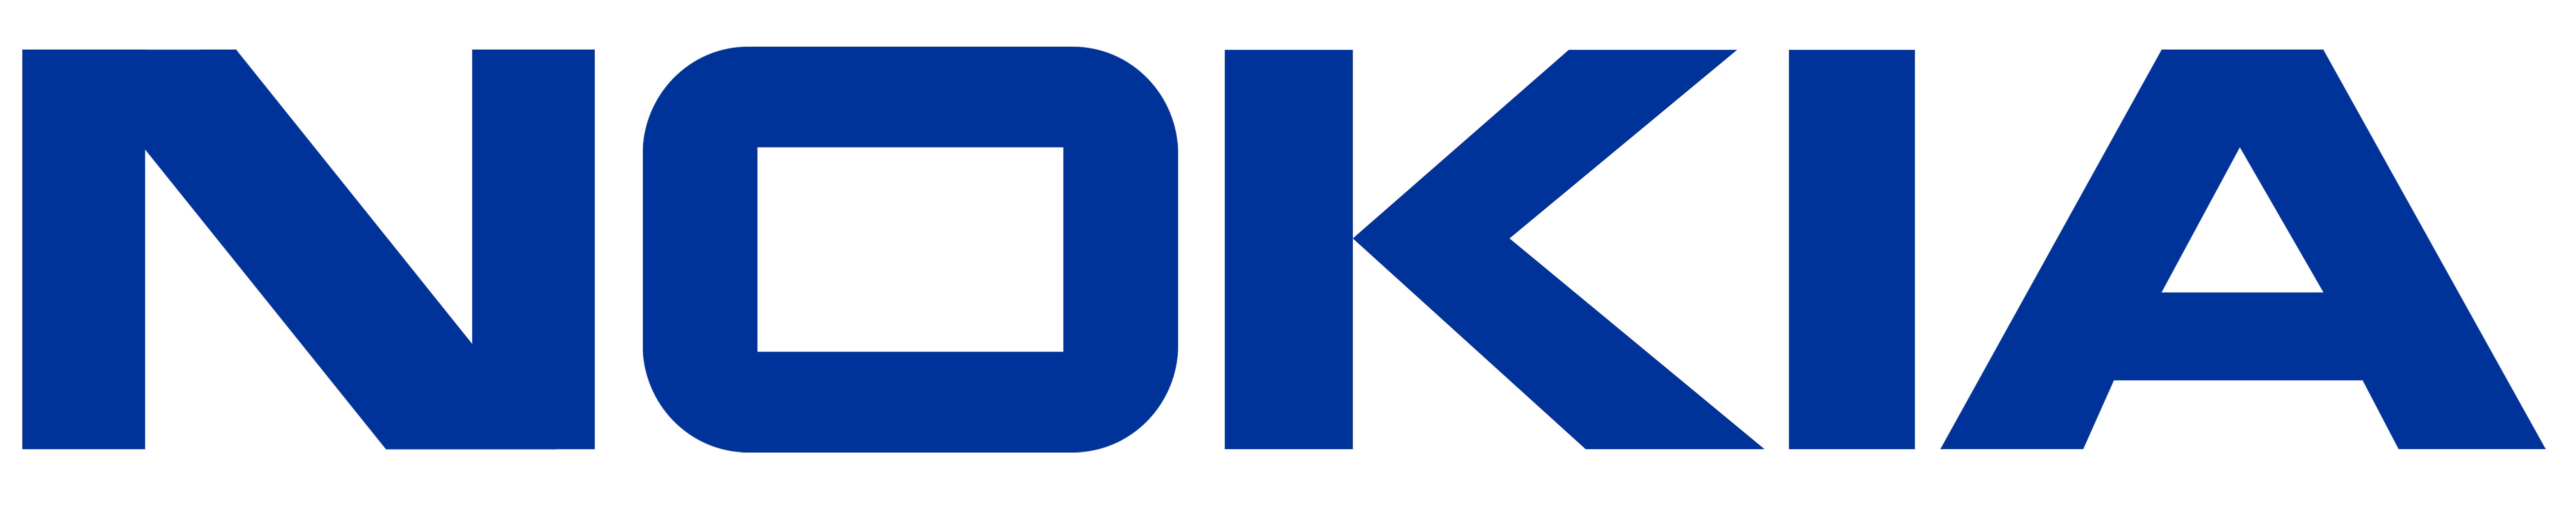 nokia-logo-picture-16